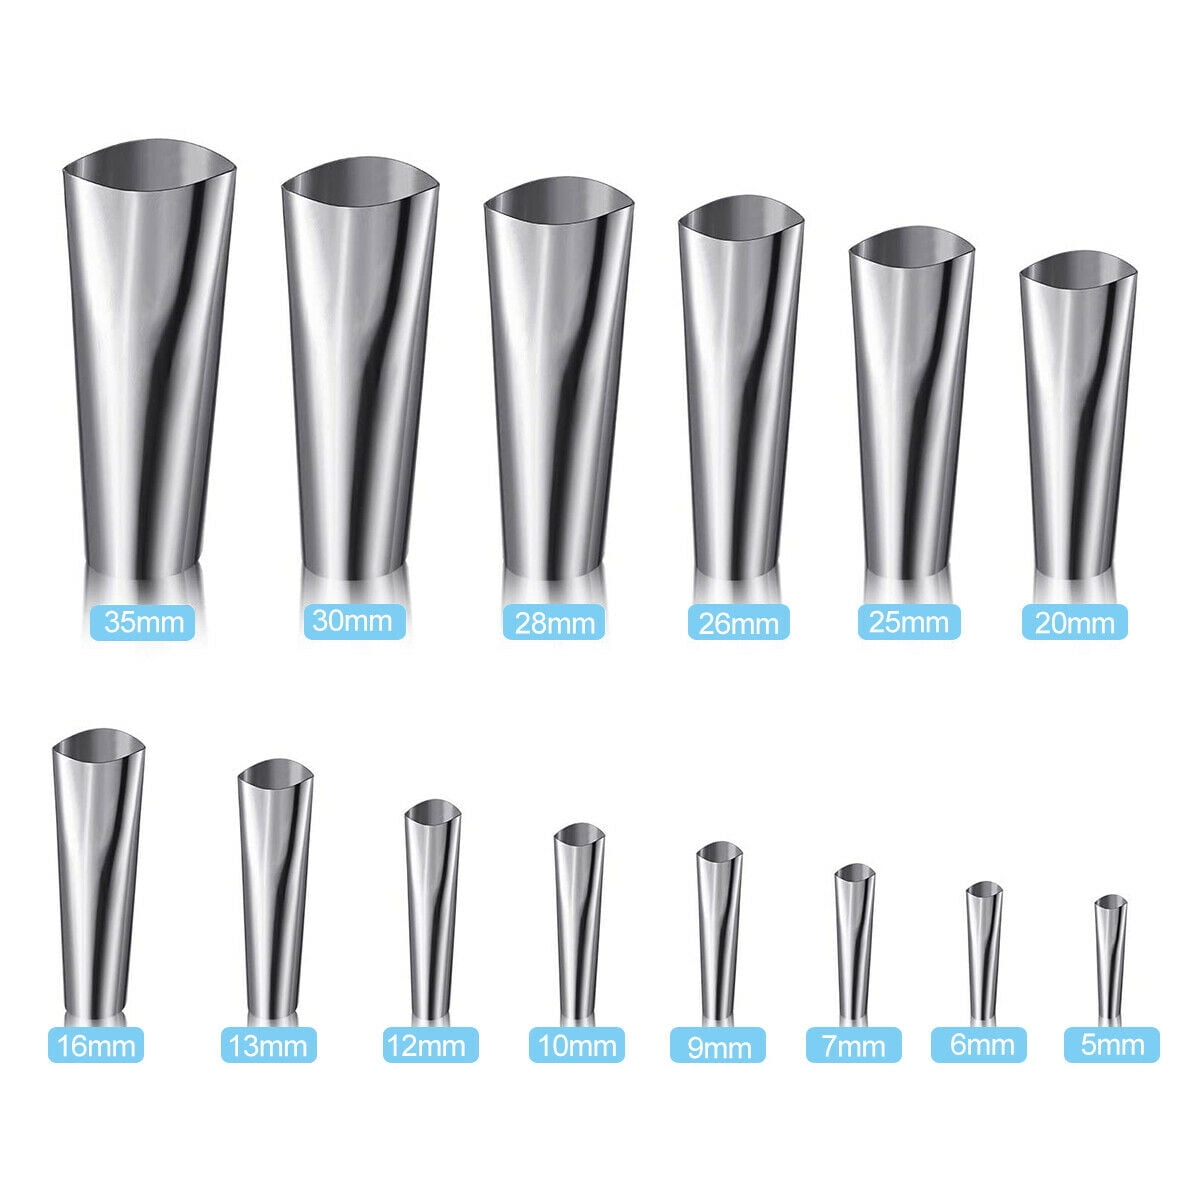 FINISHER-Caulking-Nozzle-Kitchen-Push-Rod-Stainless-Steel-Applicator-Tool 14pcs 